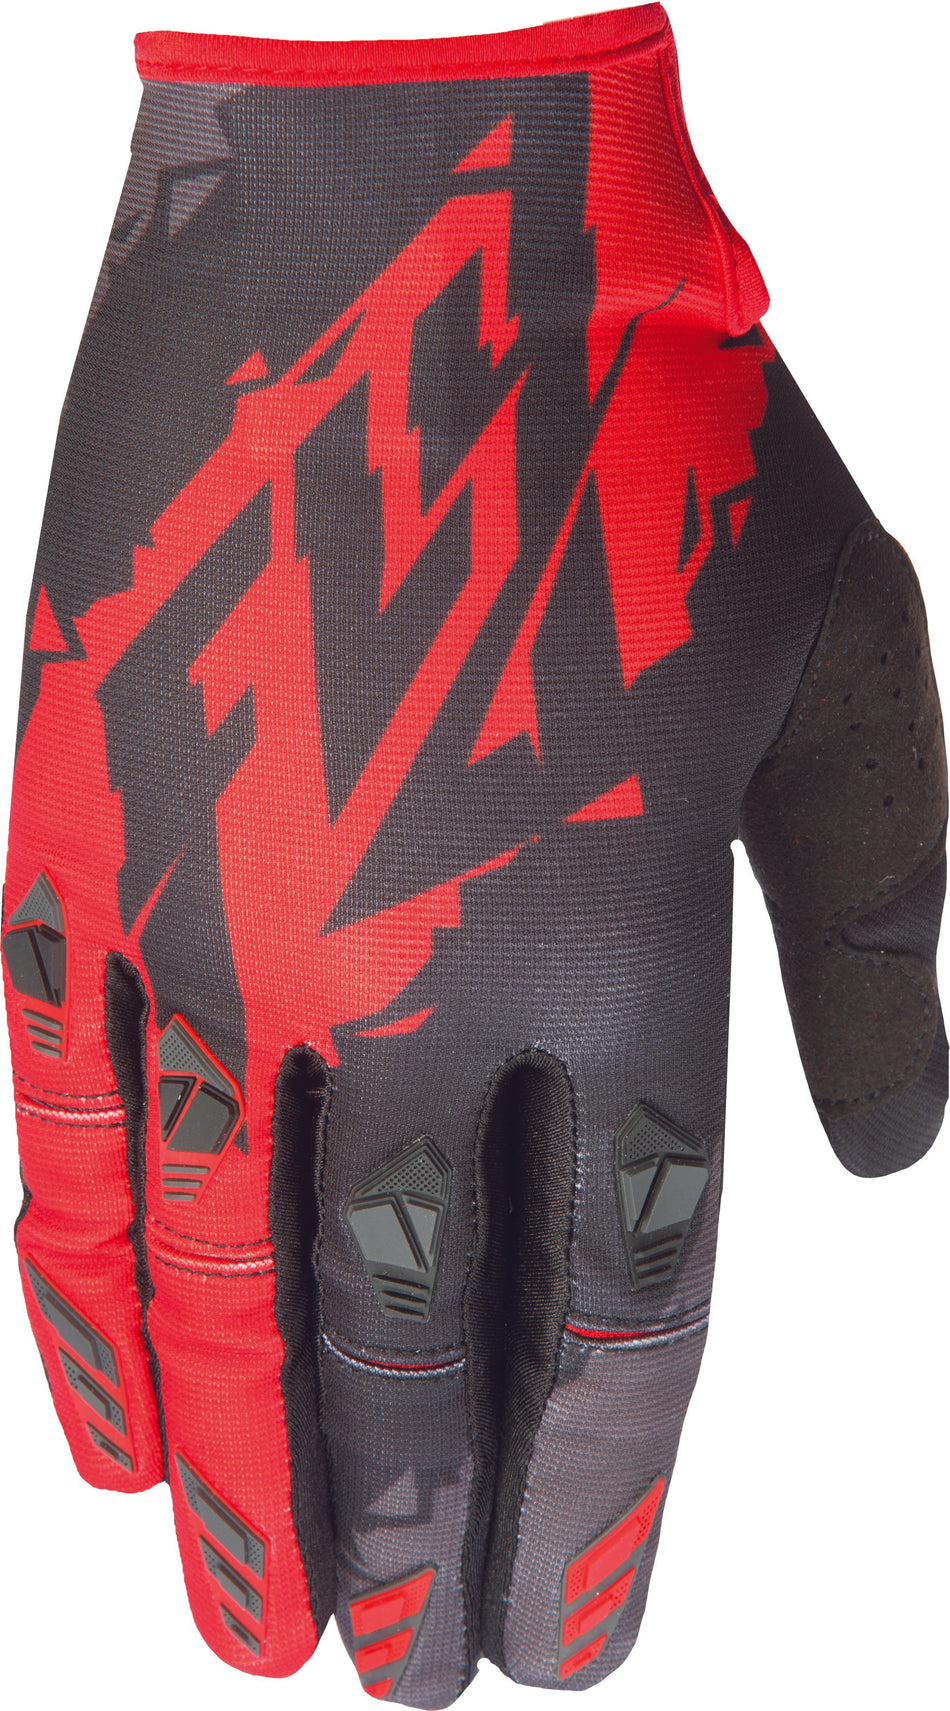 FLY RACING Kinetic Glove Black/Red Sz 12 2x 370-41212